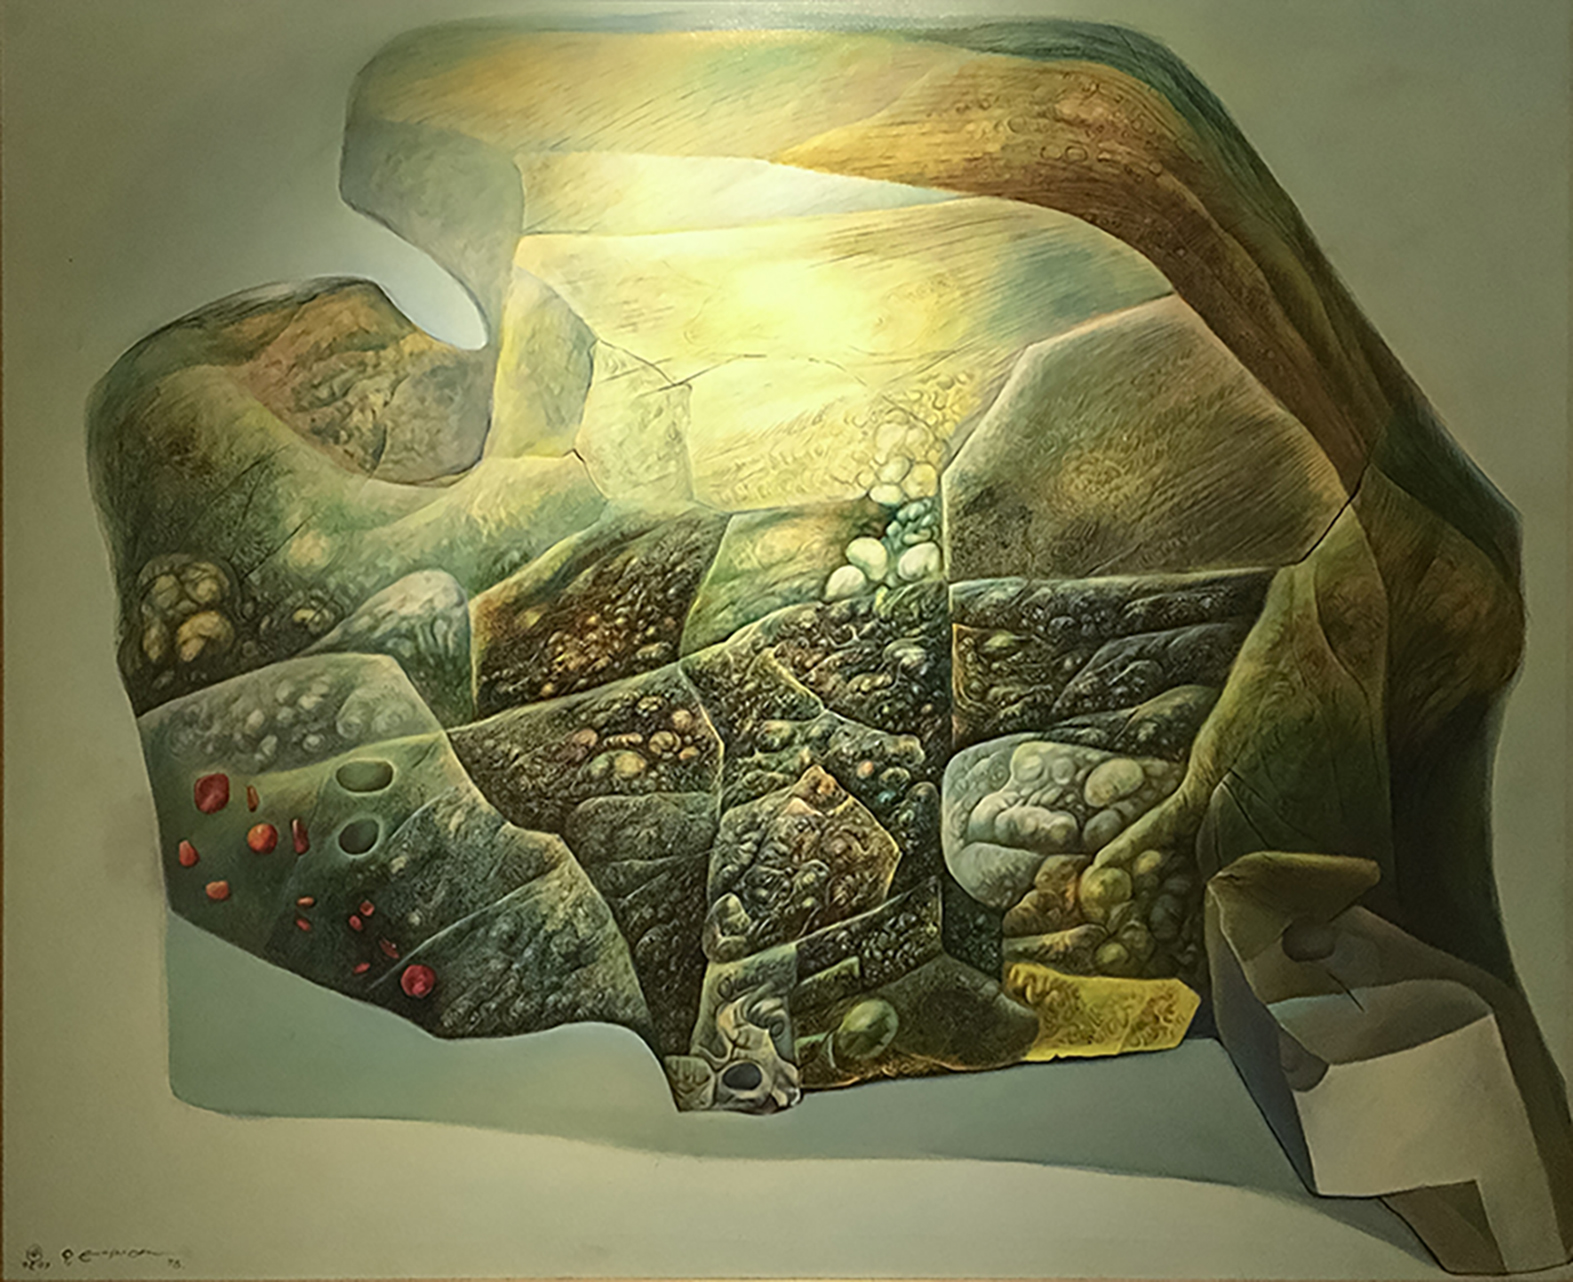 Pratuang Emjareon</br>MINERALS ON EARTH, 1977</br>Oil on canvas</br>115 x 137 cm.</br></br>ประเทือง เอมเจริญ</br>แร่ธาตุในแผ่นดิน, 2520</br>สีน้ำมันบนผ้าใบ</br>115 x 137 ซม.